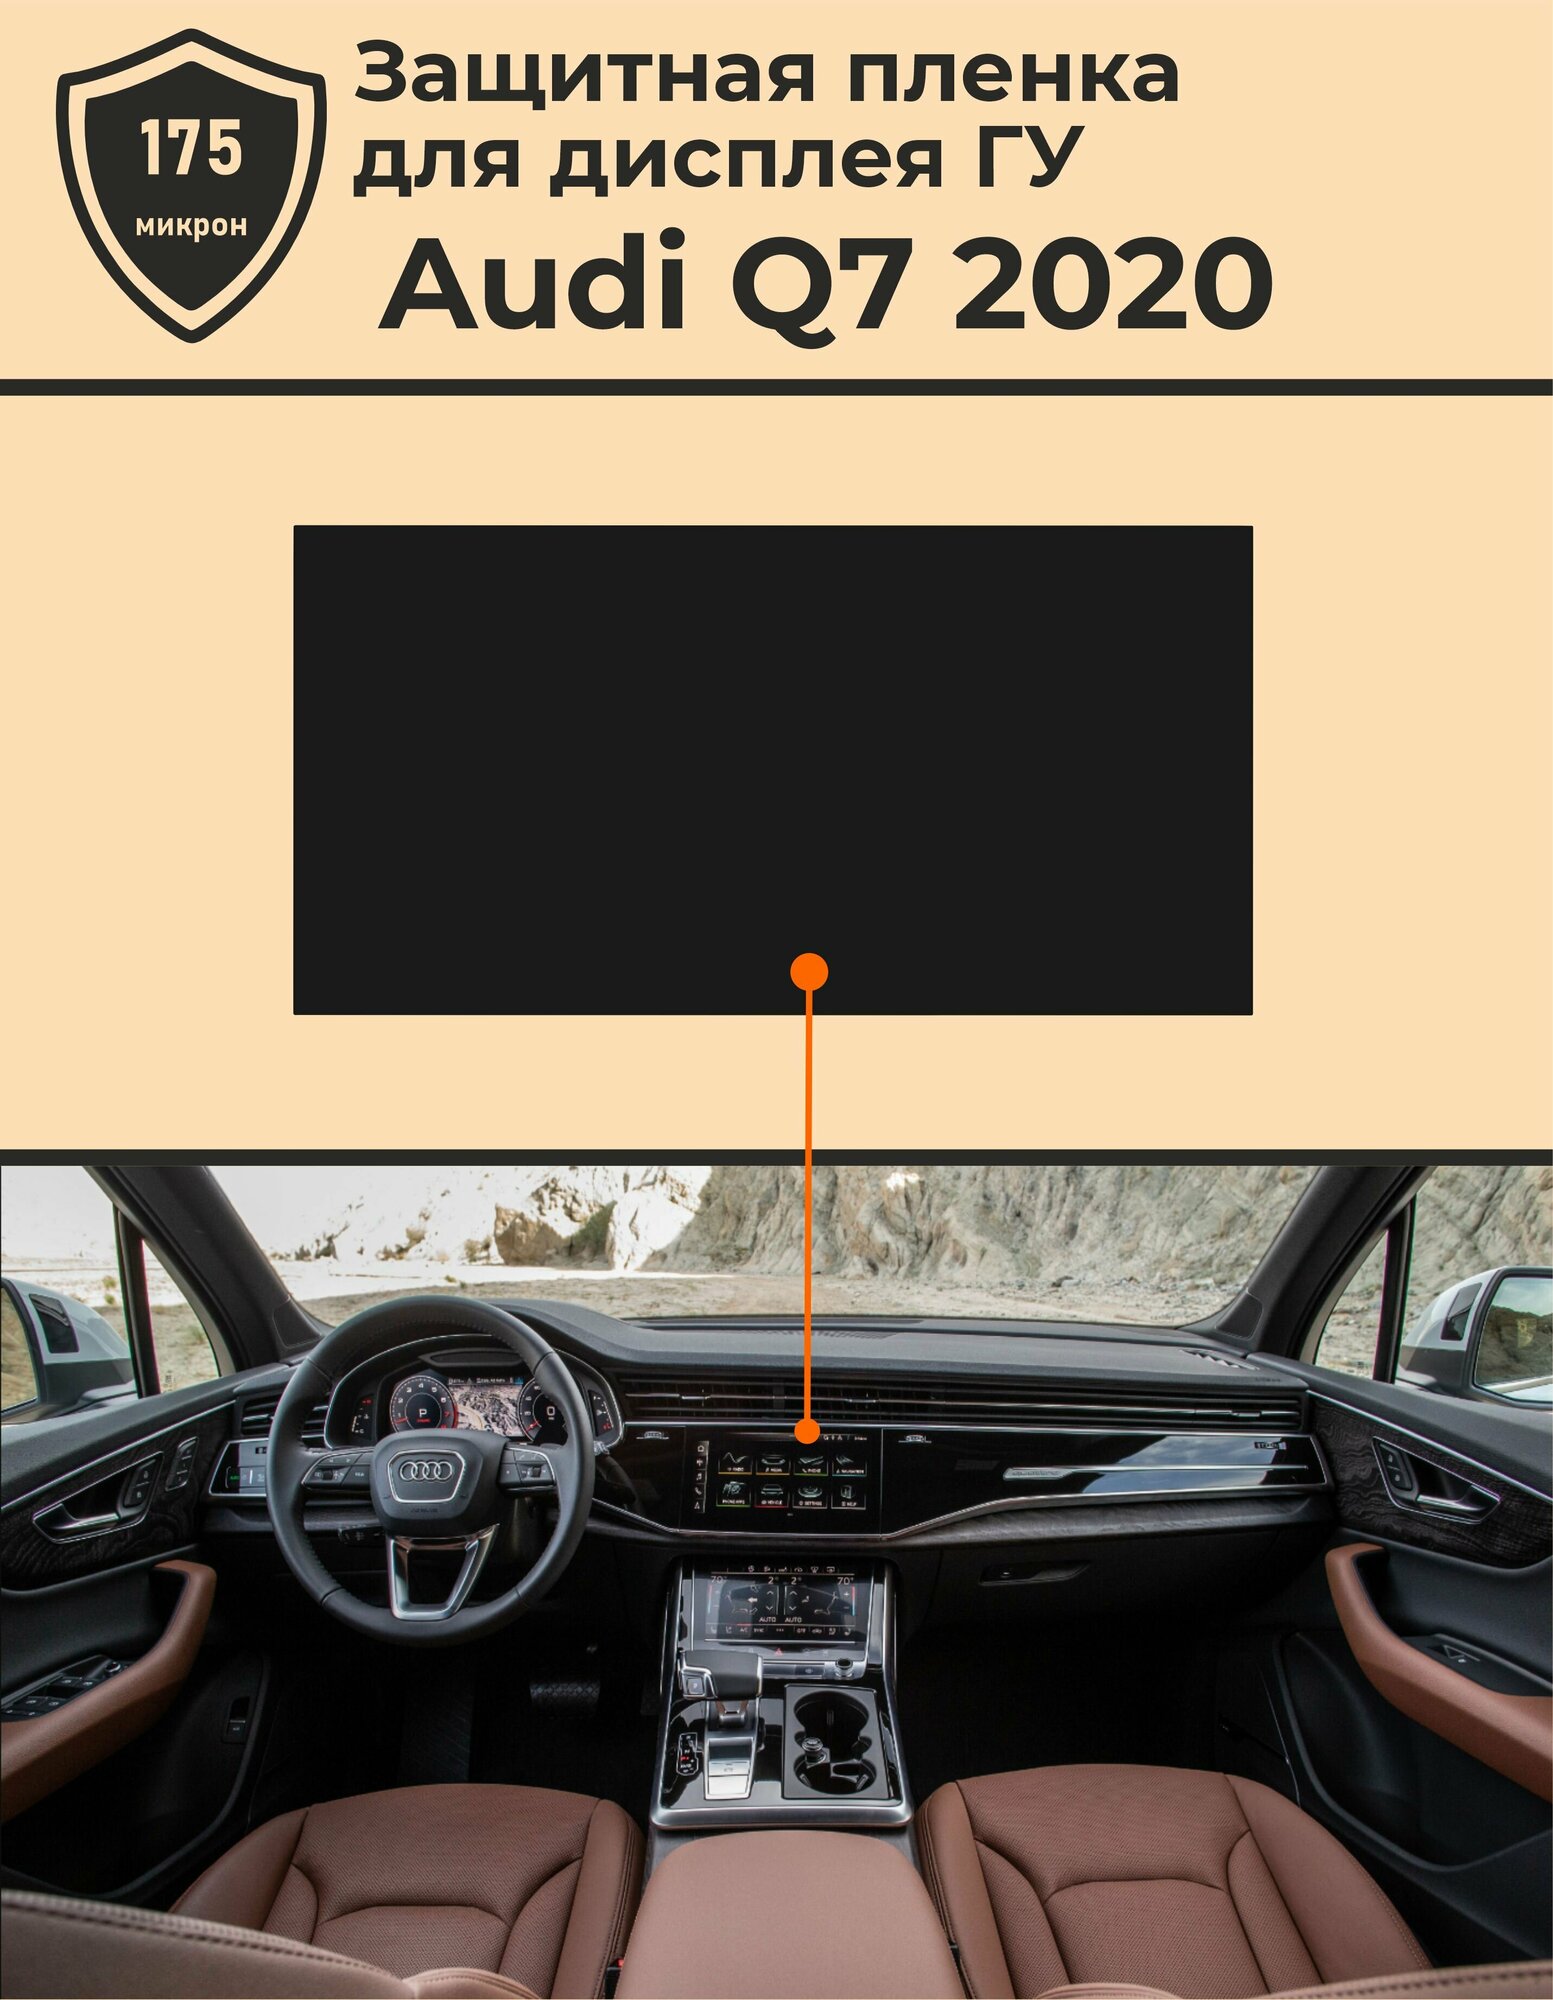 Audi Q7/Защитная пленка для дисплея ГУ